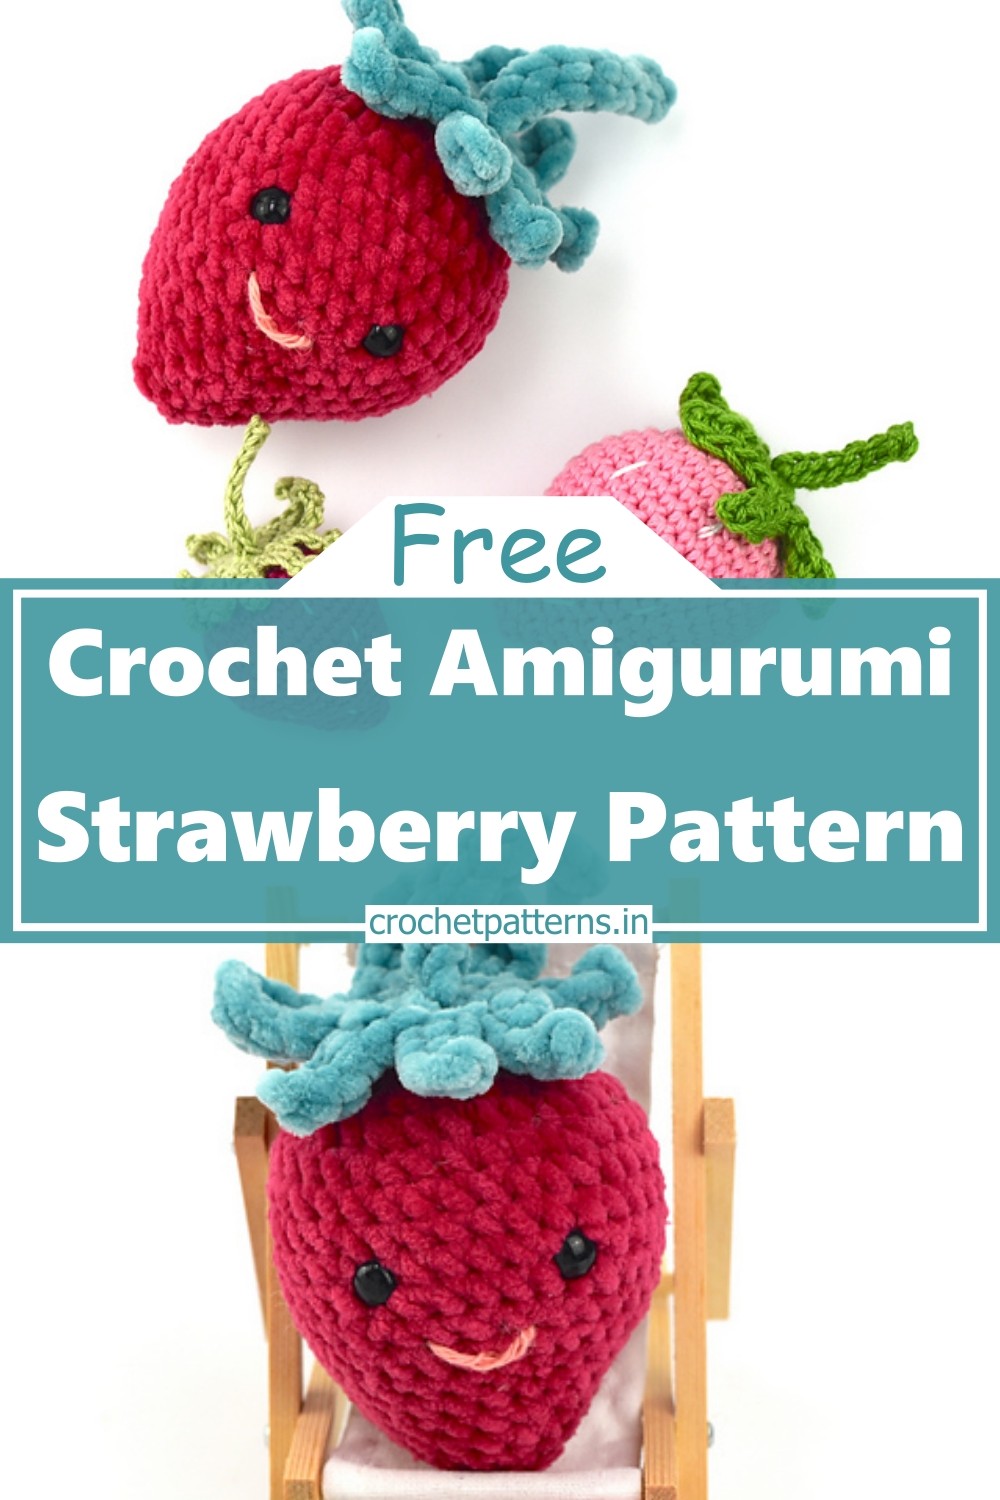 Crochet Amigurumi Strawberry Pattern